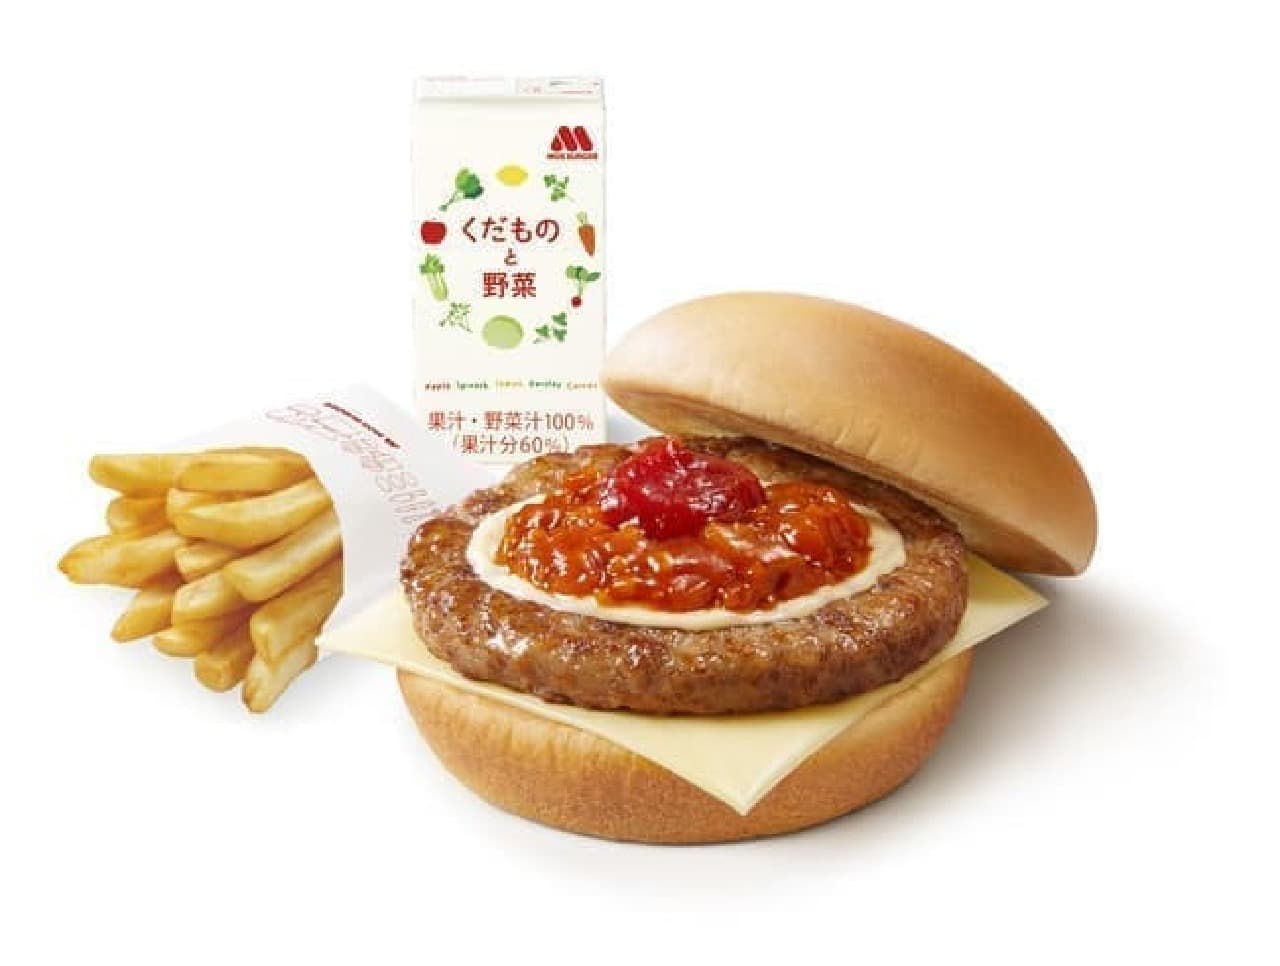 Mos Burger "Kirby of the Stars" collaboration toys --Moss Wai Wai set & low allergen menu set target